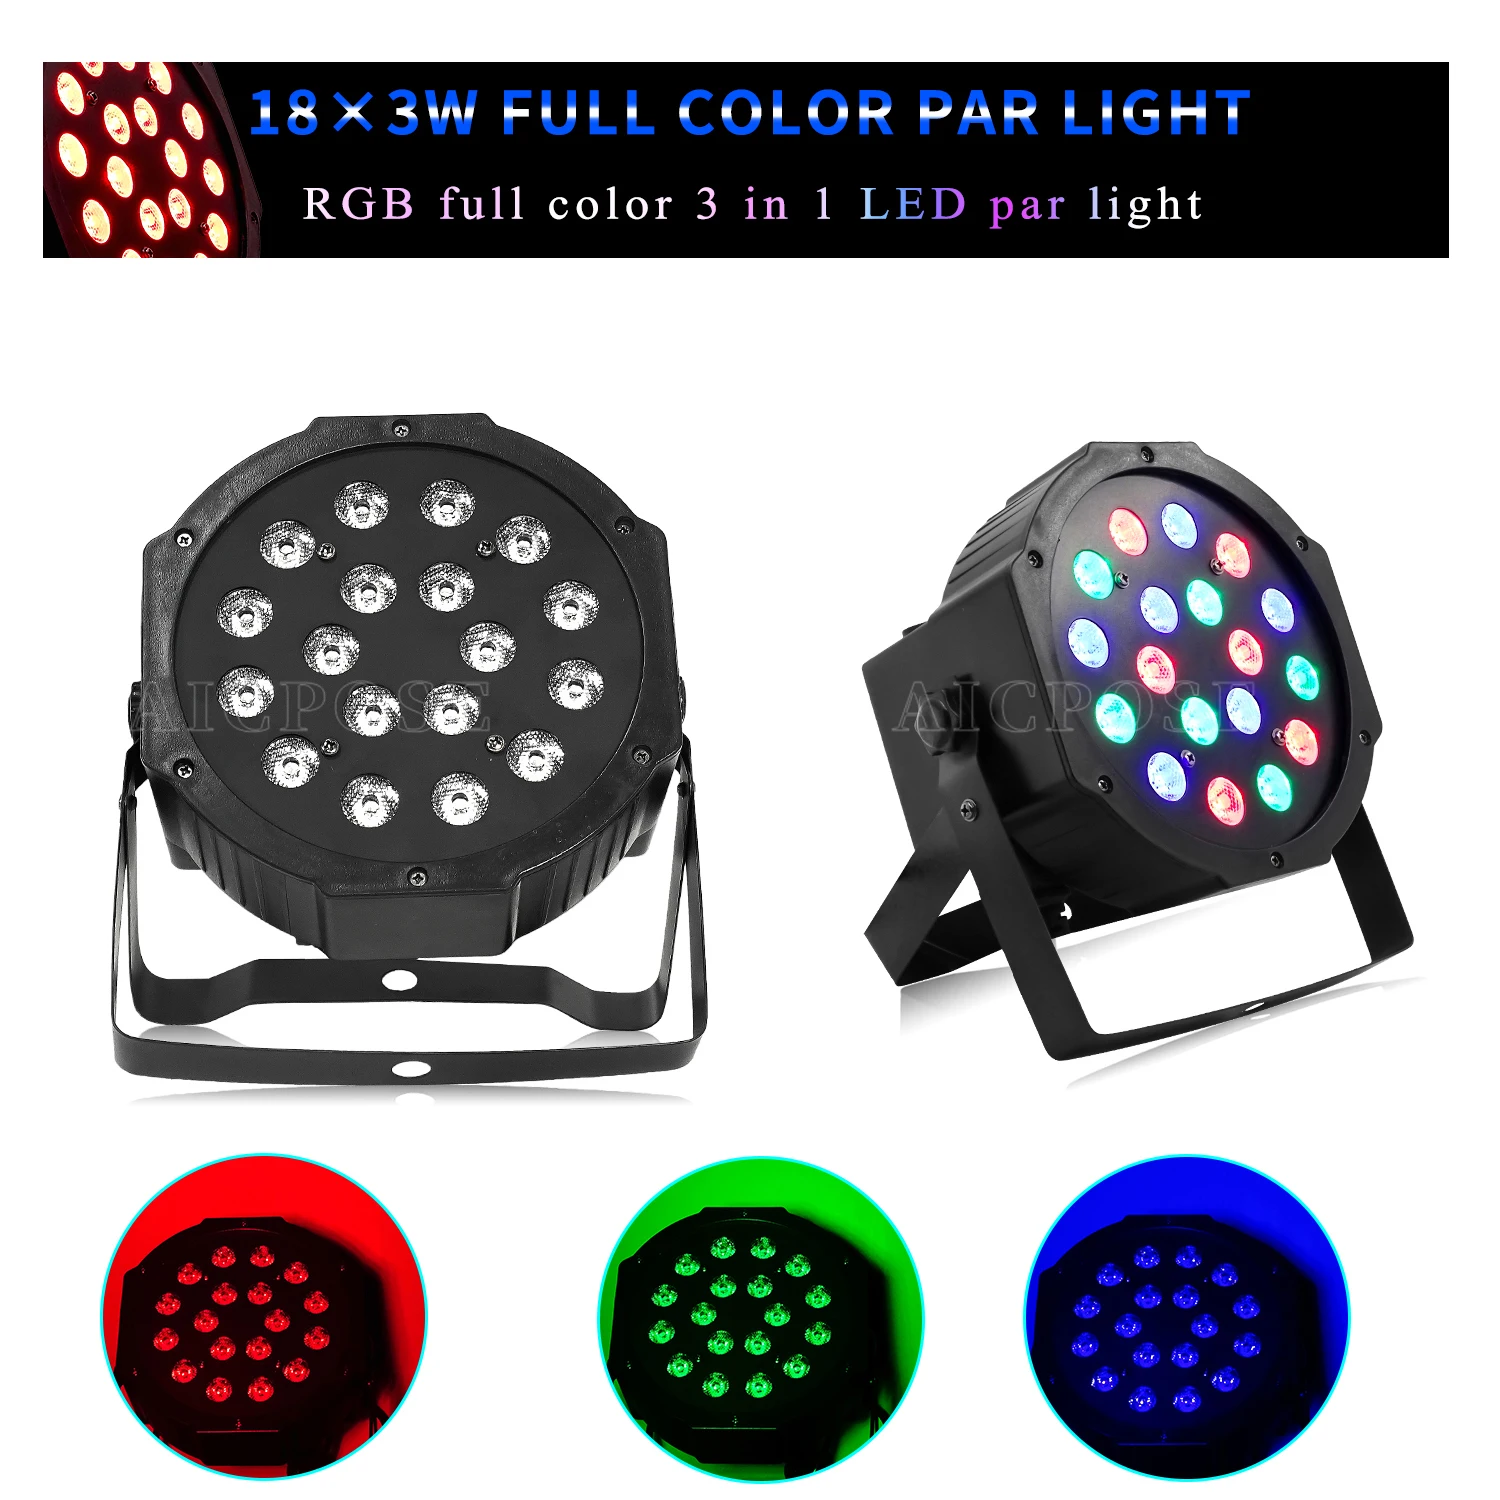 18x3W RGB 3 in 1 LED Par Light Color Stage Light DMX512 Professional Control DJ Disco Equipment Home Party Wedding Lighting